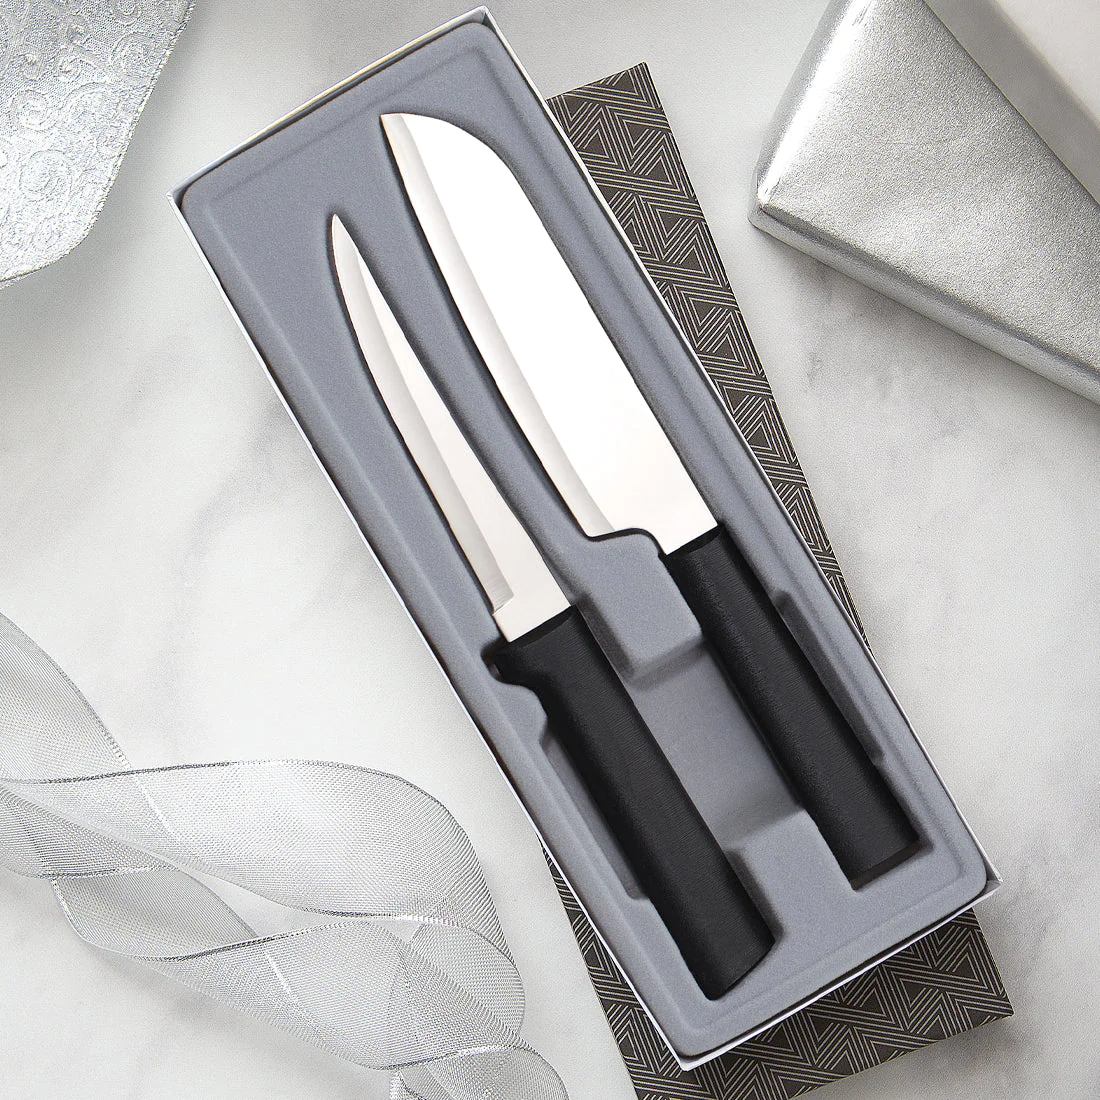 Rada Cutlery 4-Piece Kitchen Utensil Gift Set Stainless Steel Set with Black